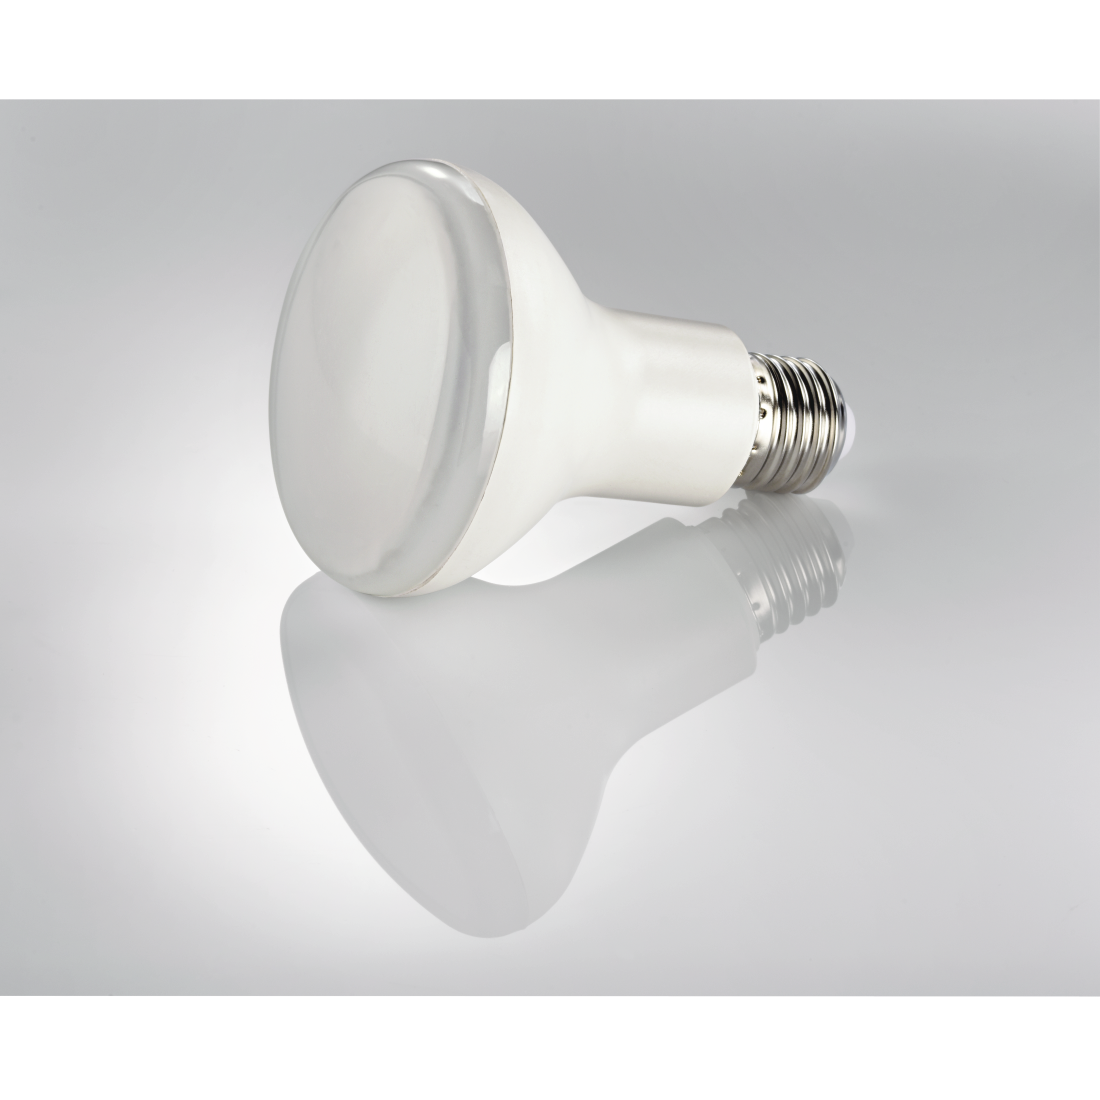 abx3 High-Res Image 3 - Xavax, LED Bulb, E27, 1050 lm Replaces 75 W, Reflector Bulb R80, warm white